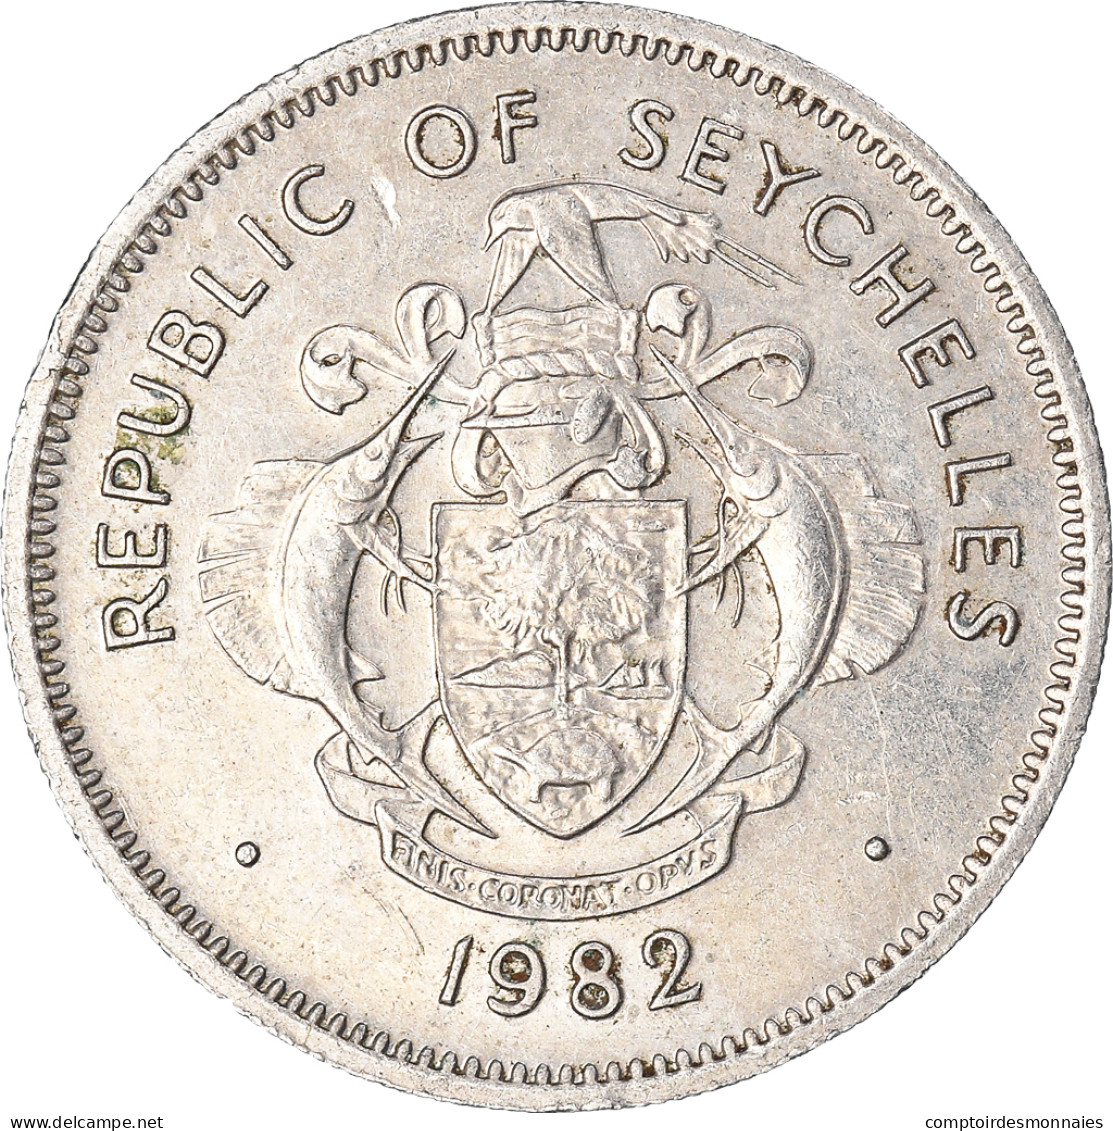 Monnaie, Seychelles, Rupee, 1982 - Seychelles